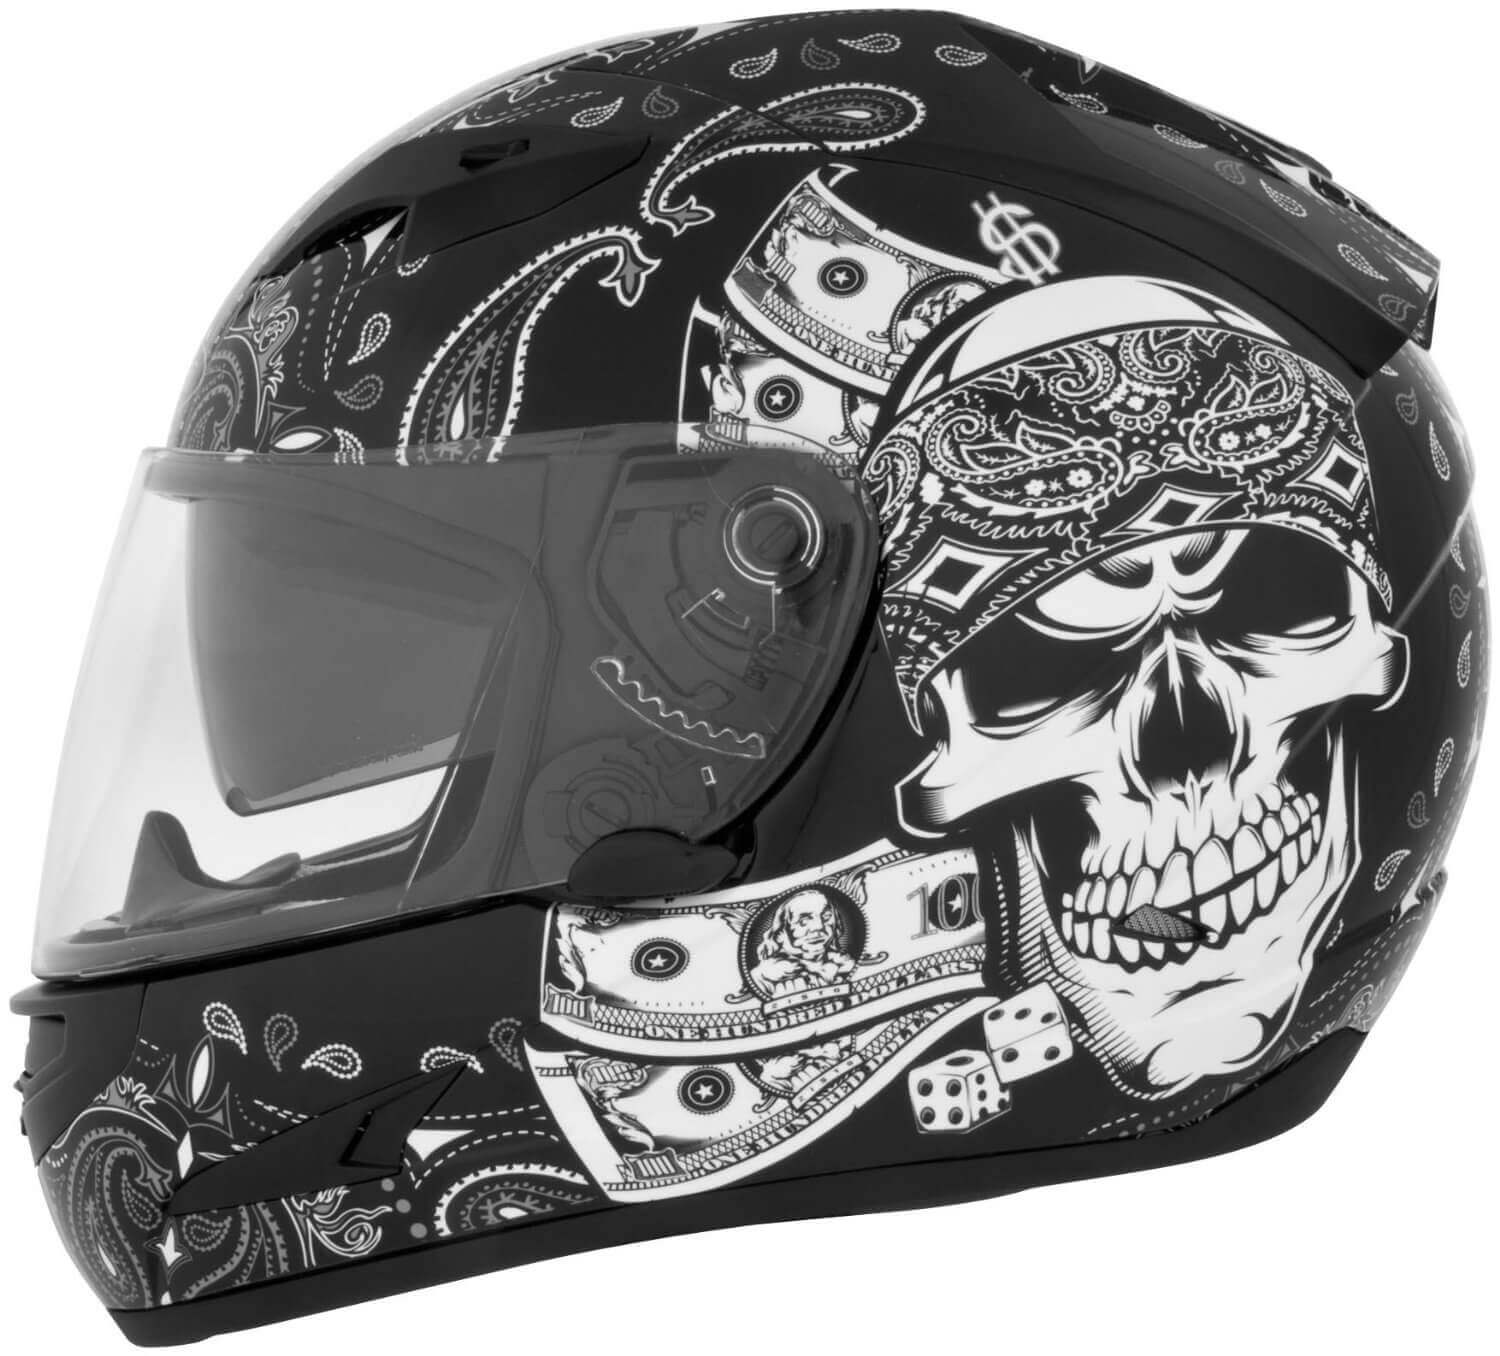 helmets that look like skulls